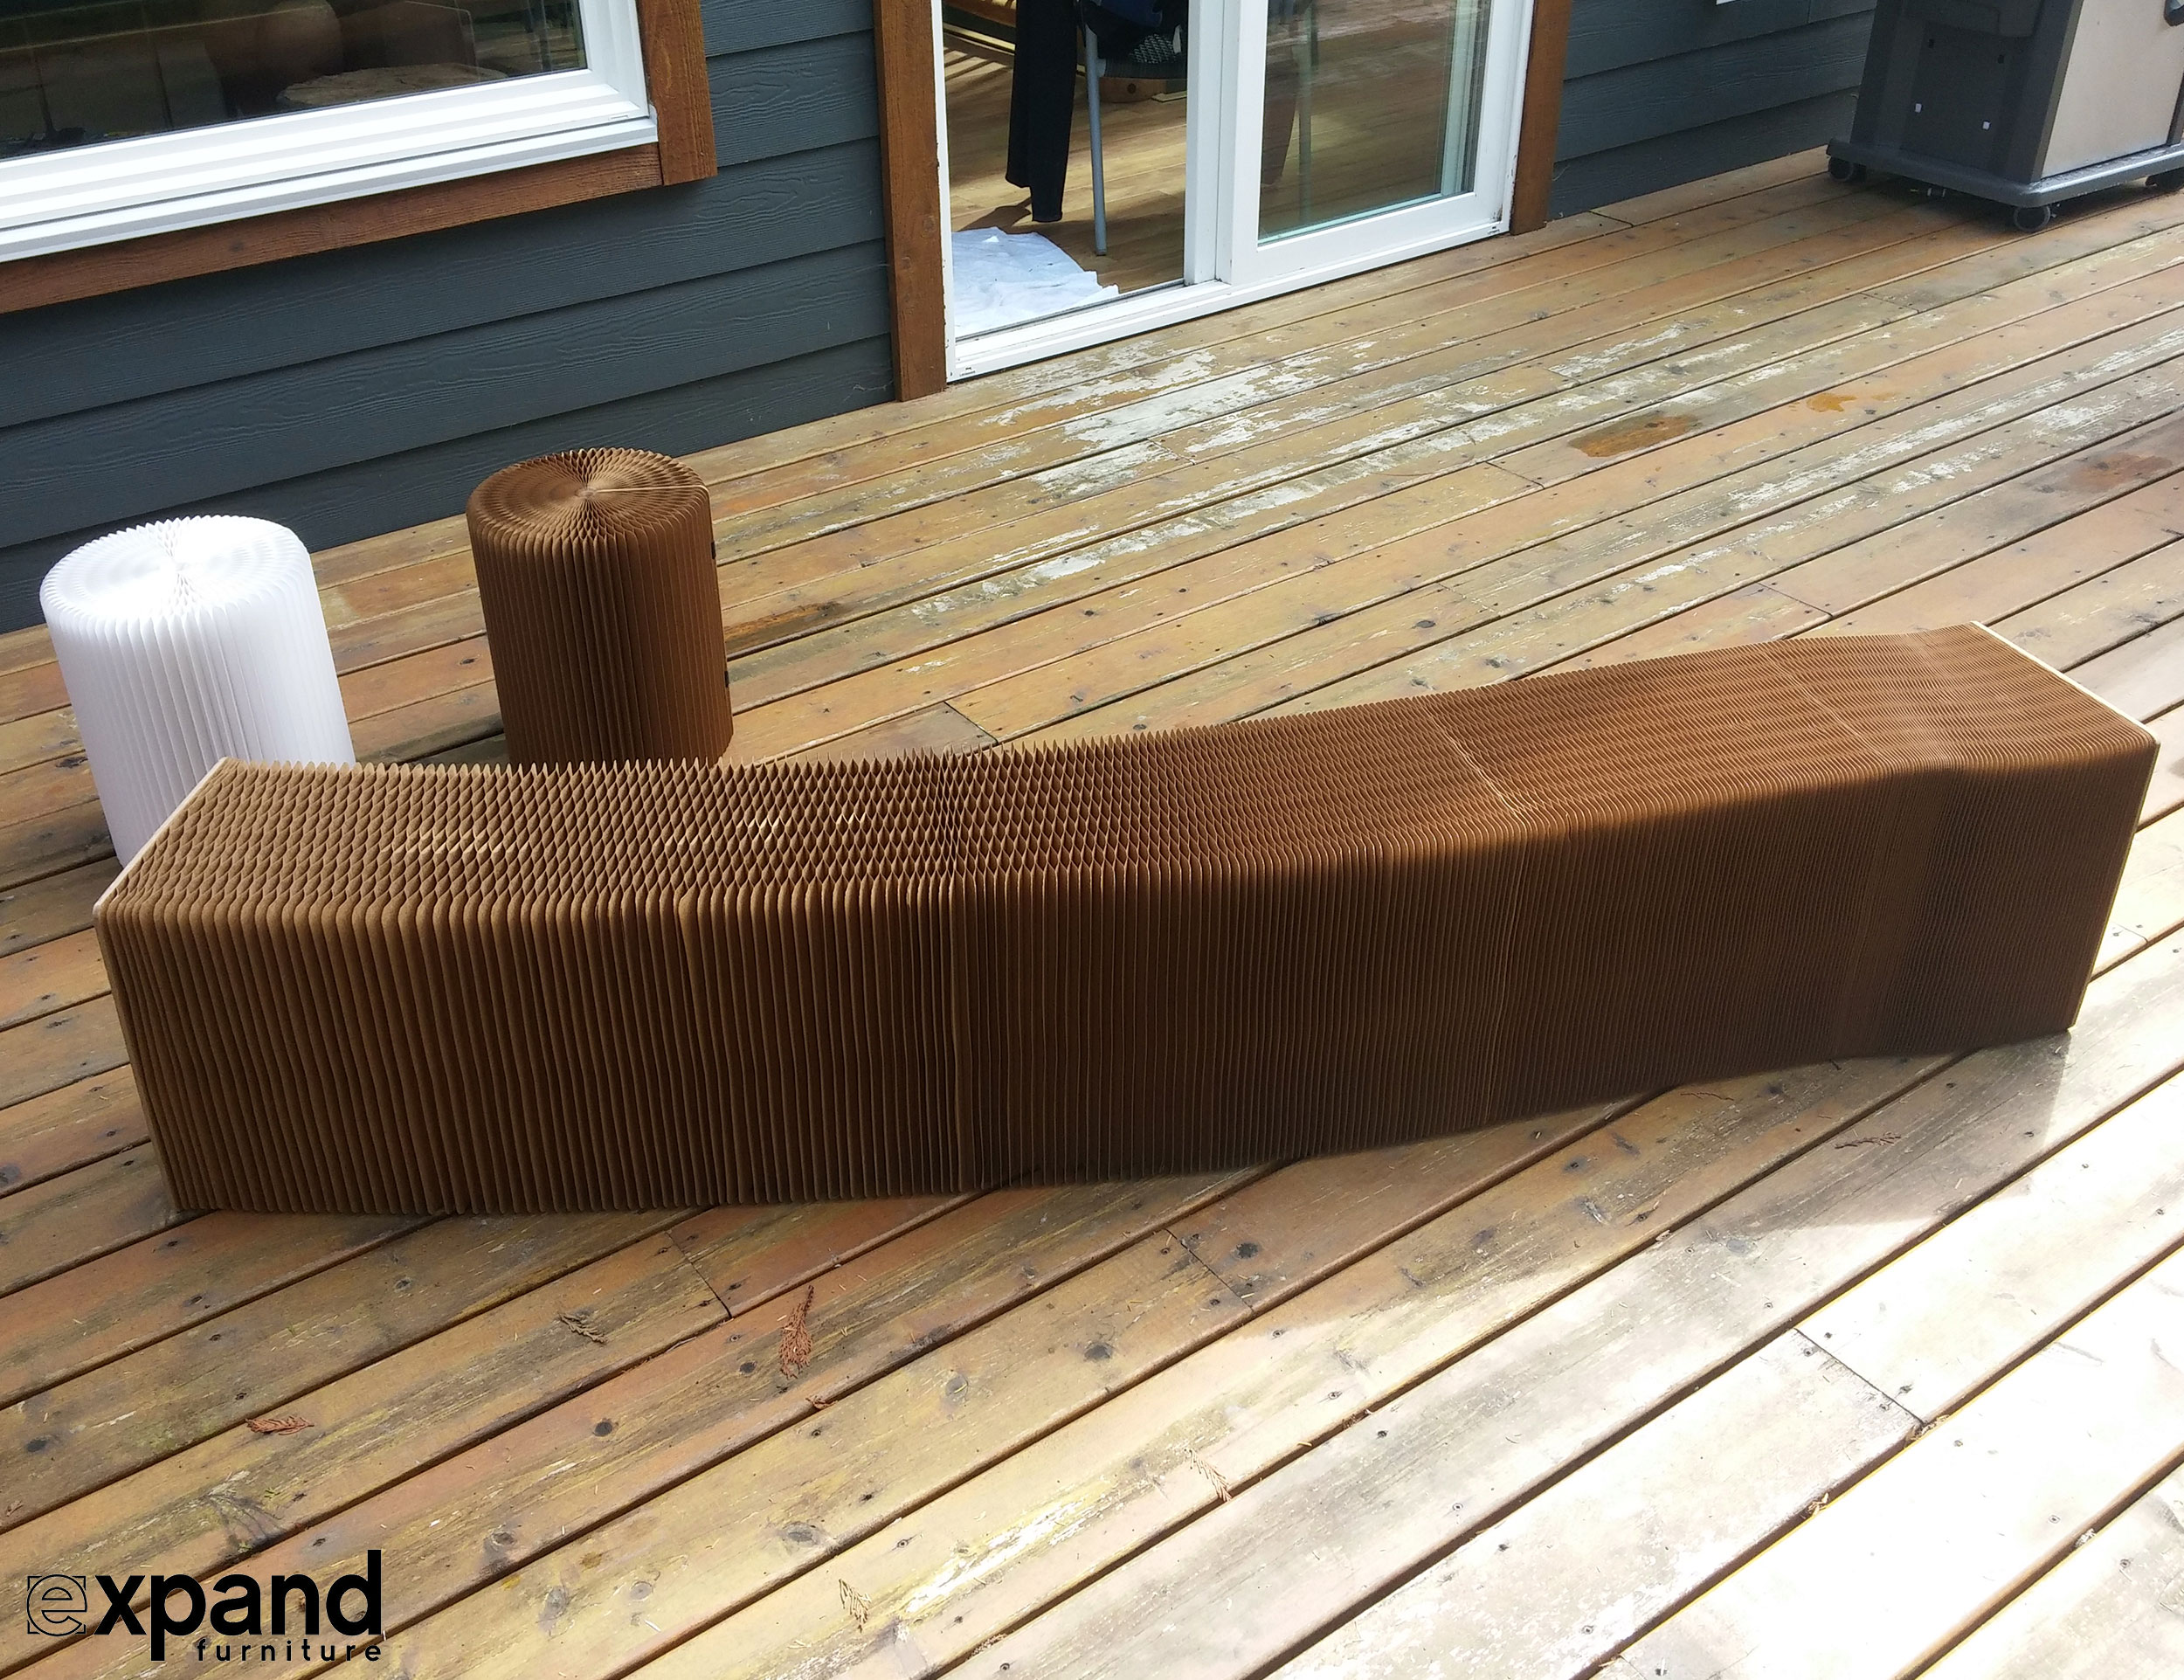 FlexYah Bench: Flexible Expanding Paper Seats 10 | Expand Furniture ...